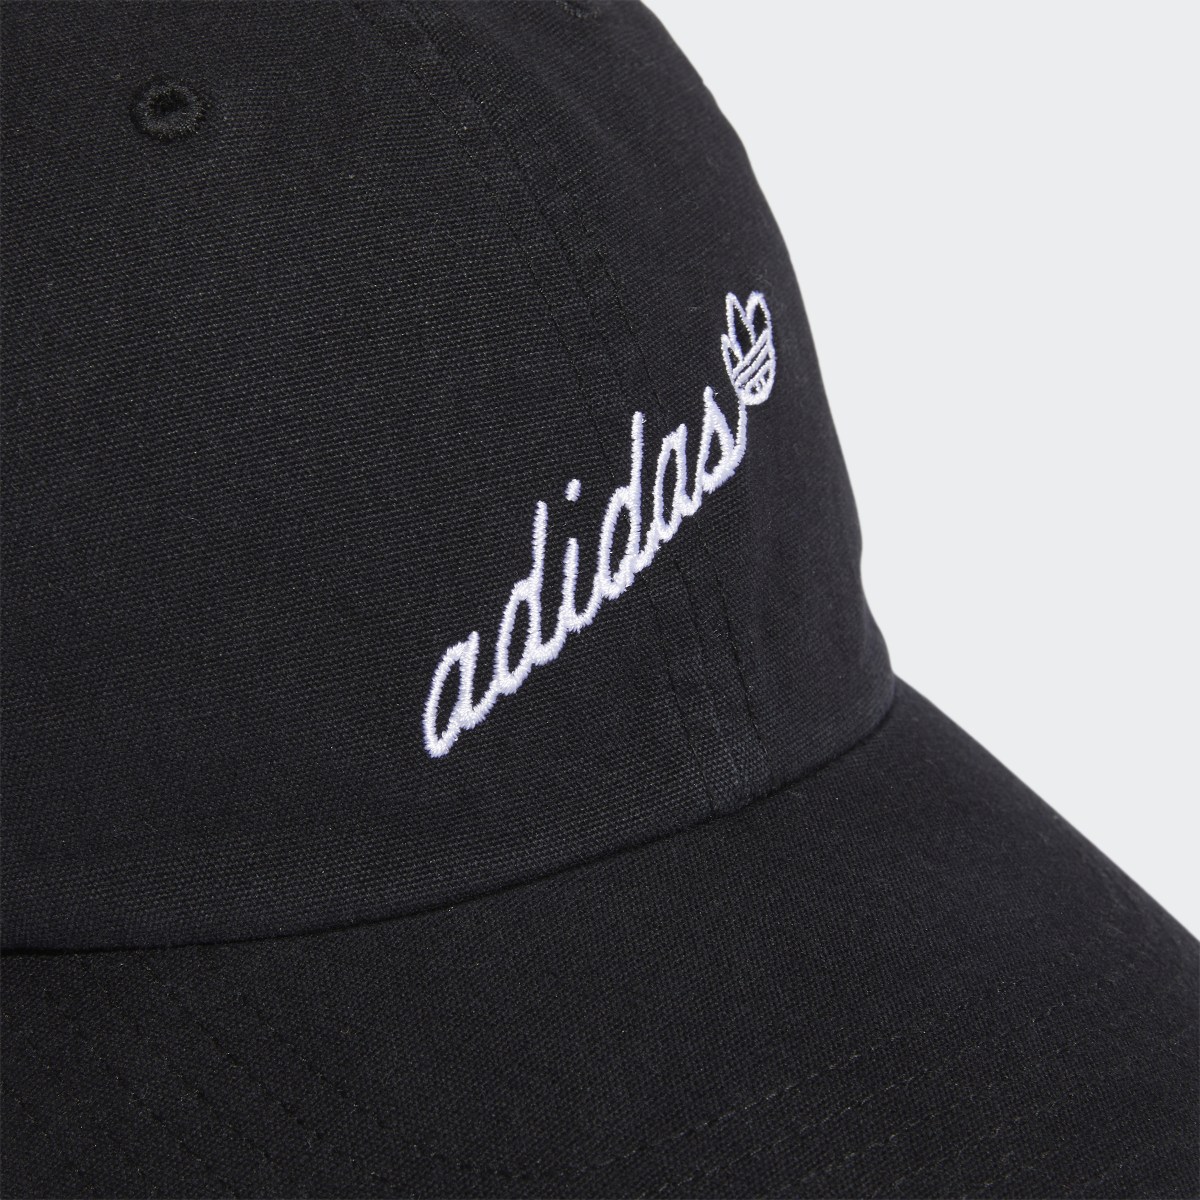 Adidas Script Strap-Back Hat. 6